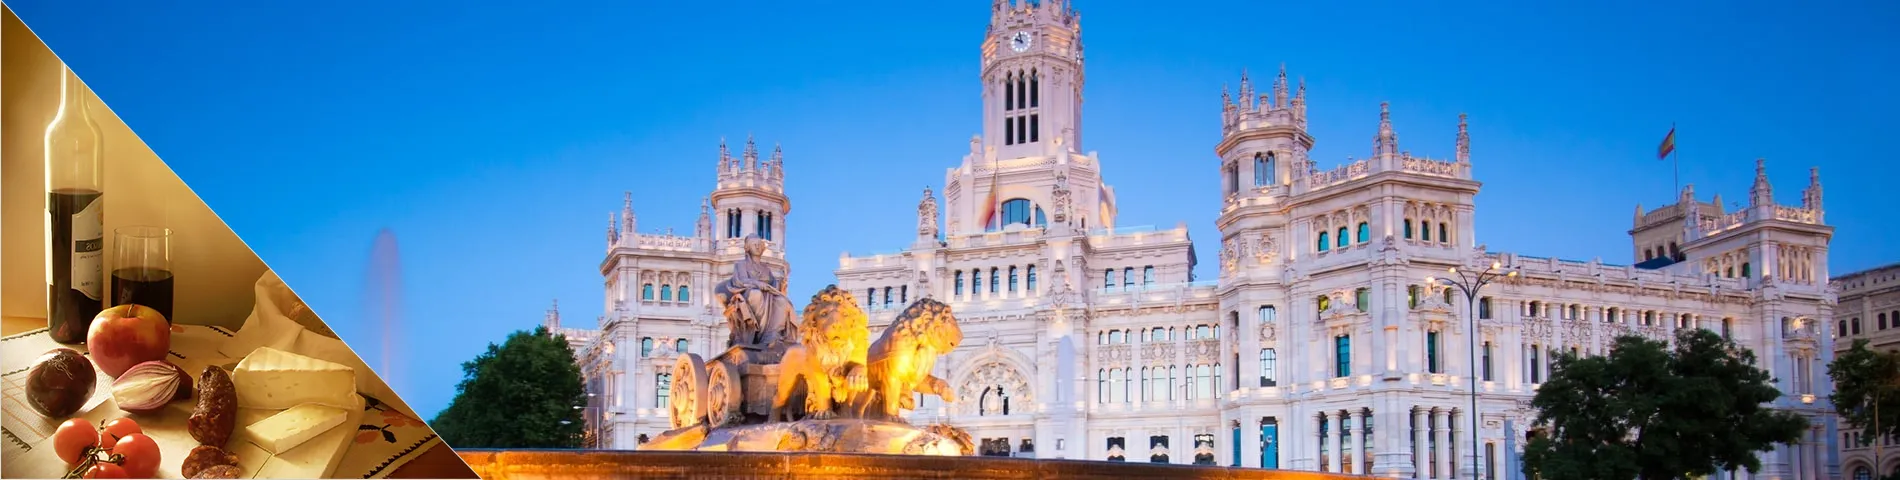 Madrid - Spanyol Kulturális nyelvtanfolyam (kombinált)